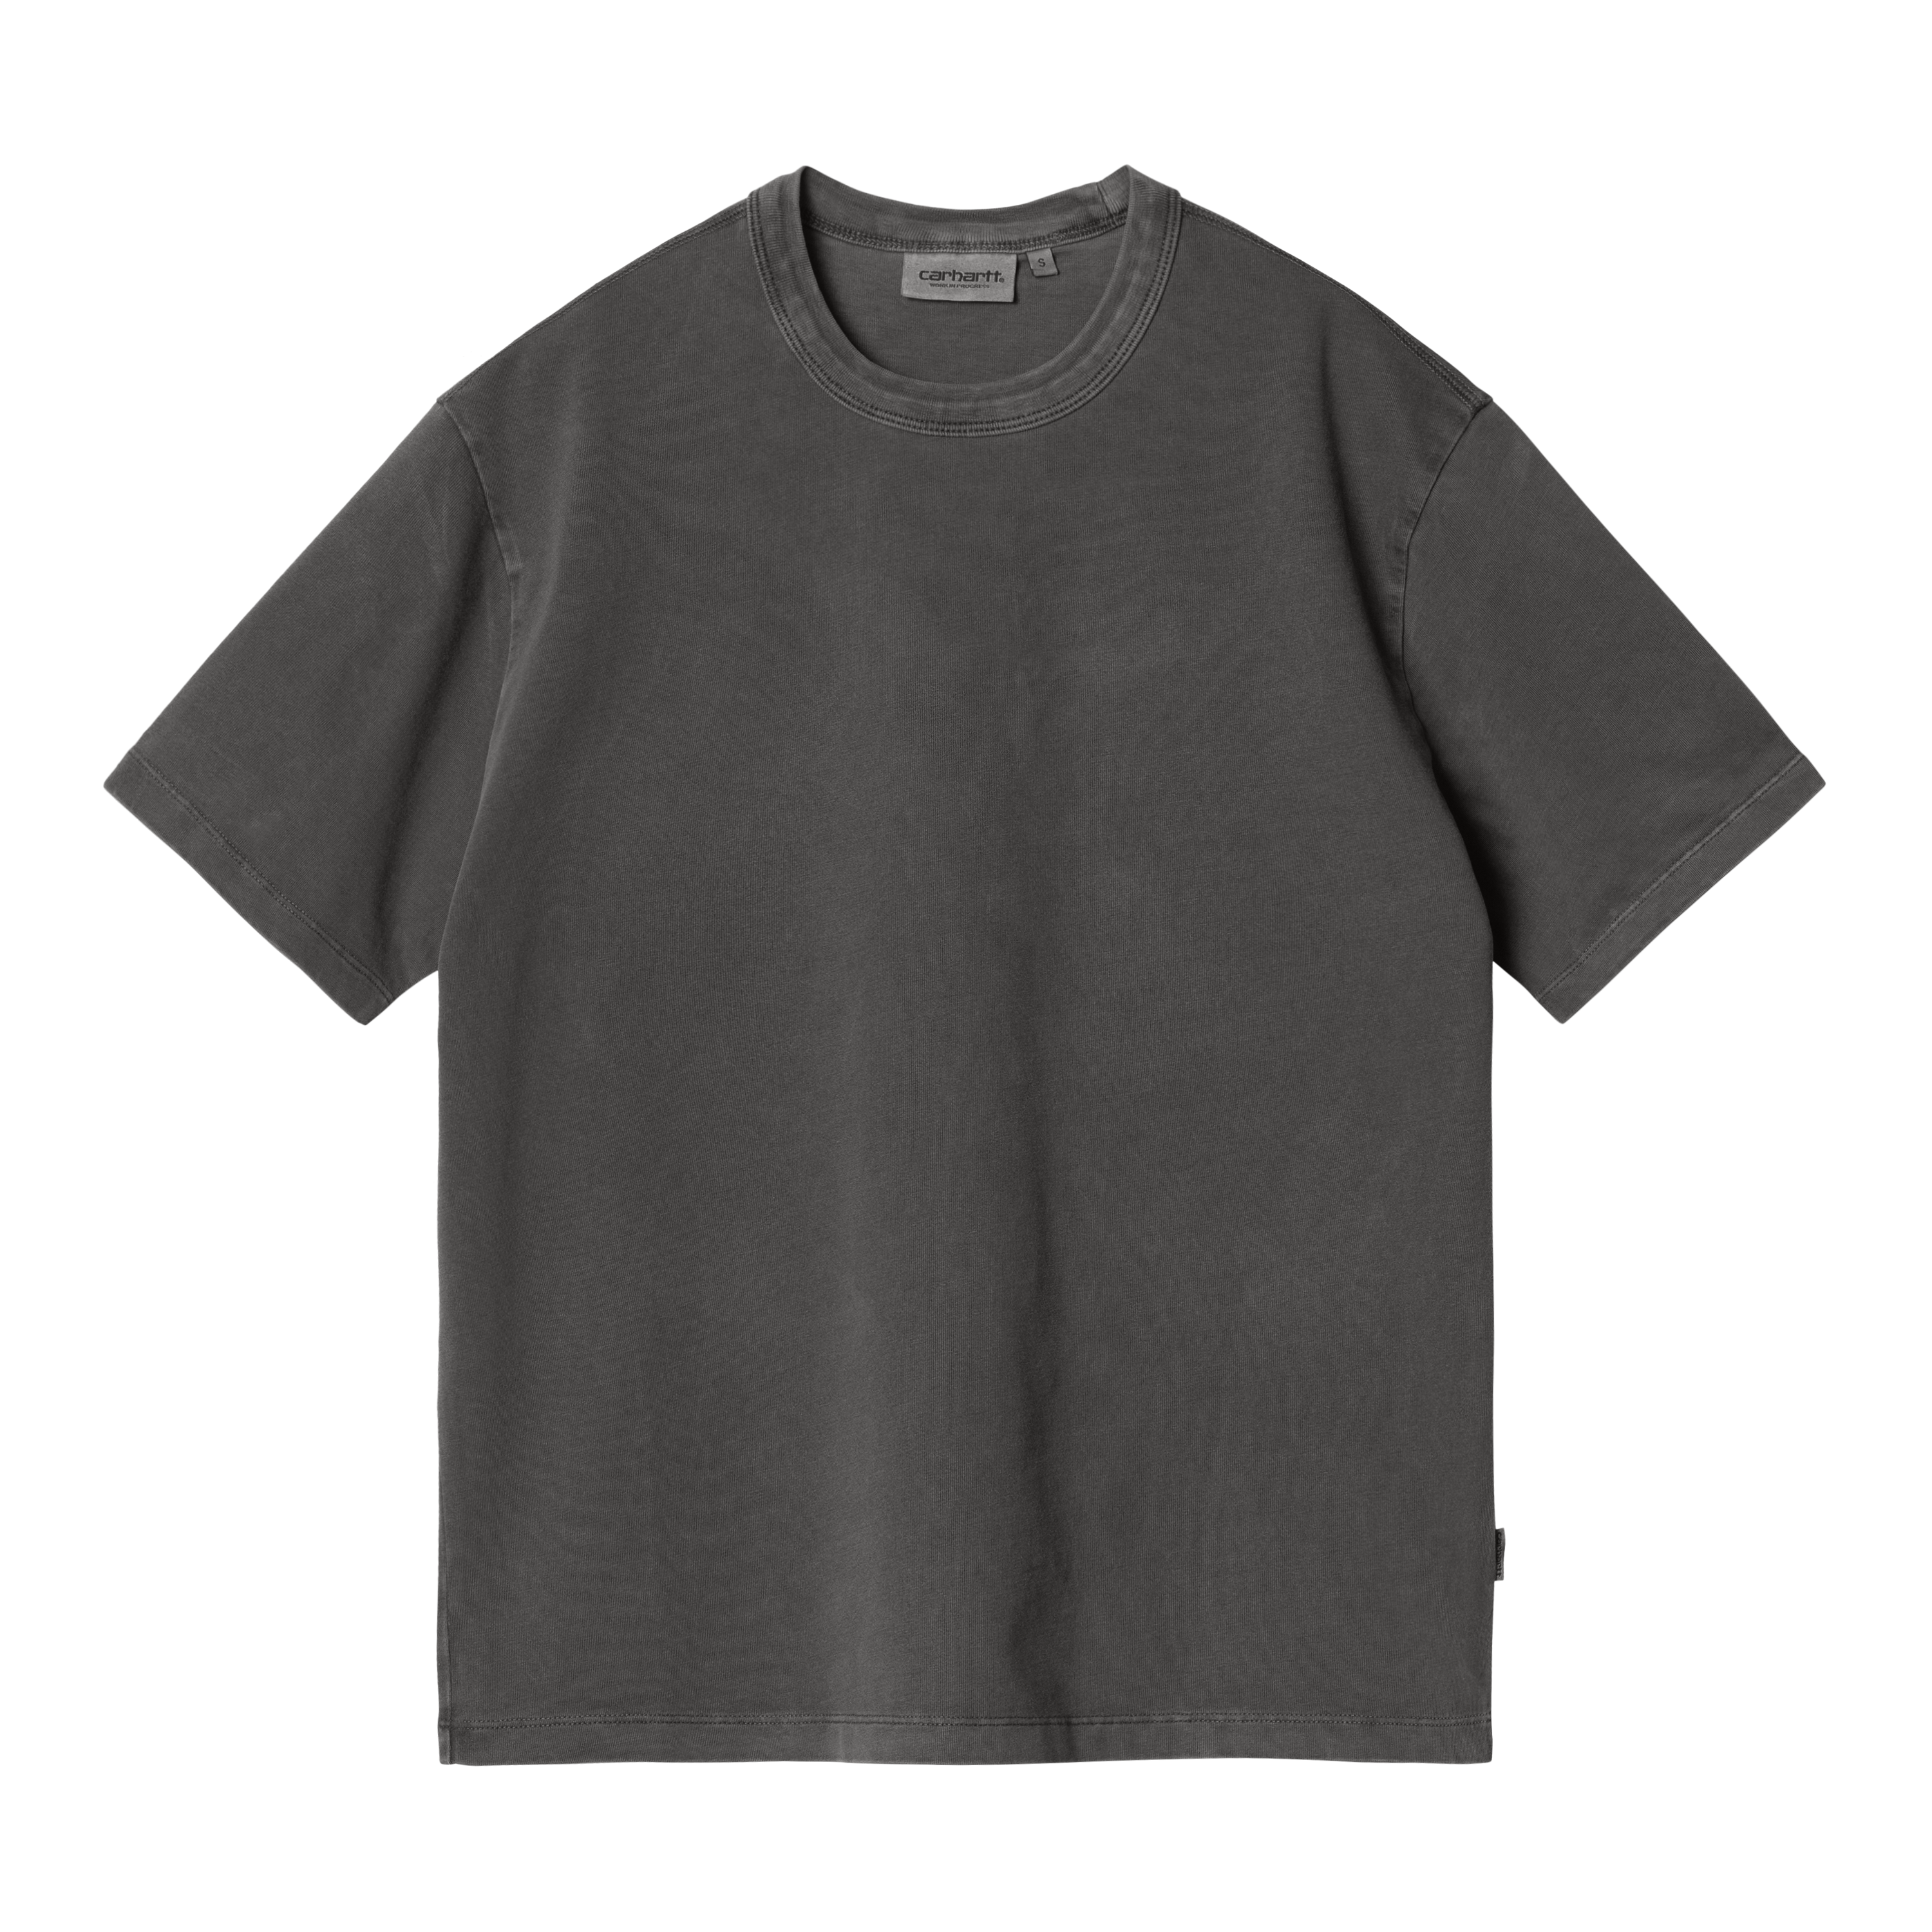 Carhartt WIP Women’s Short Sleeve Taos T-Shirt in Nero